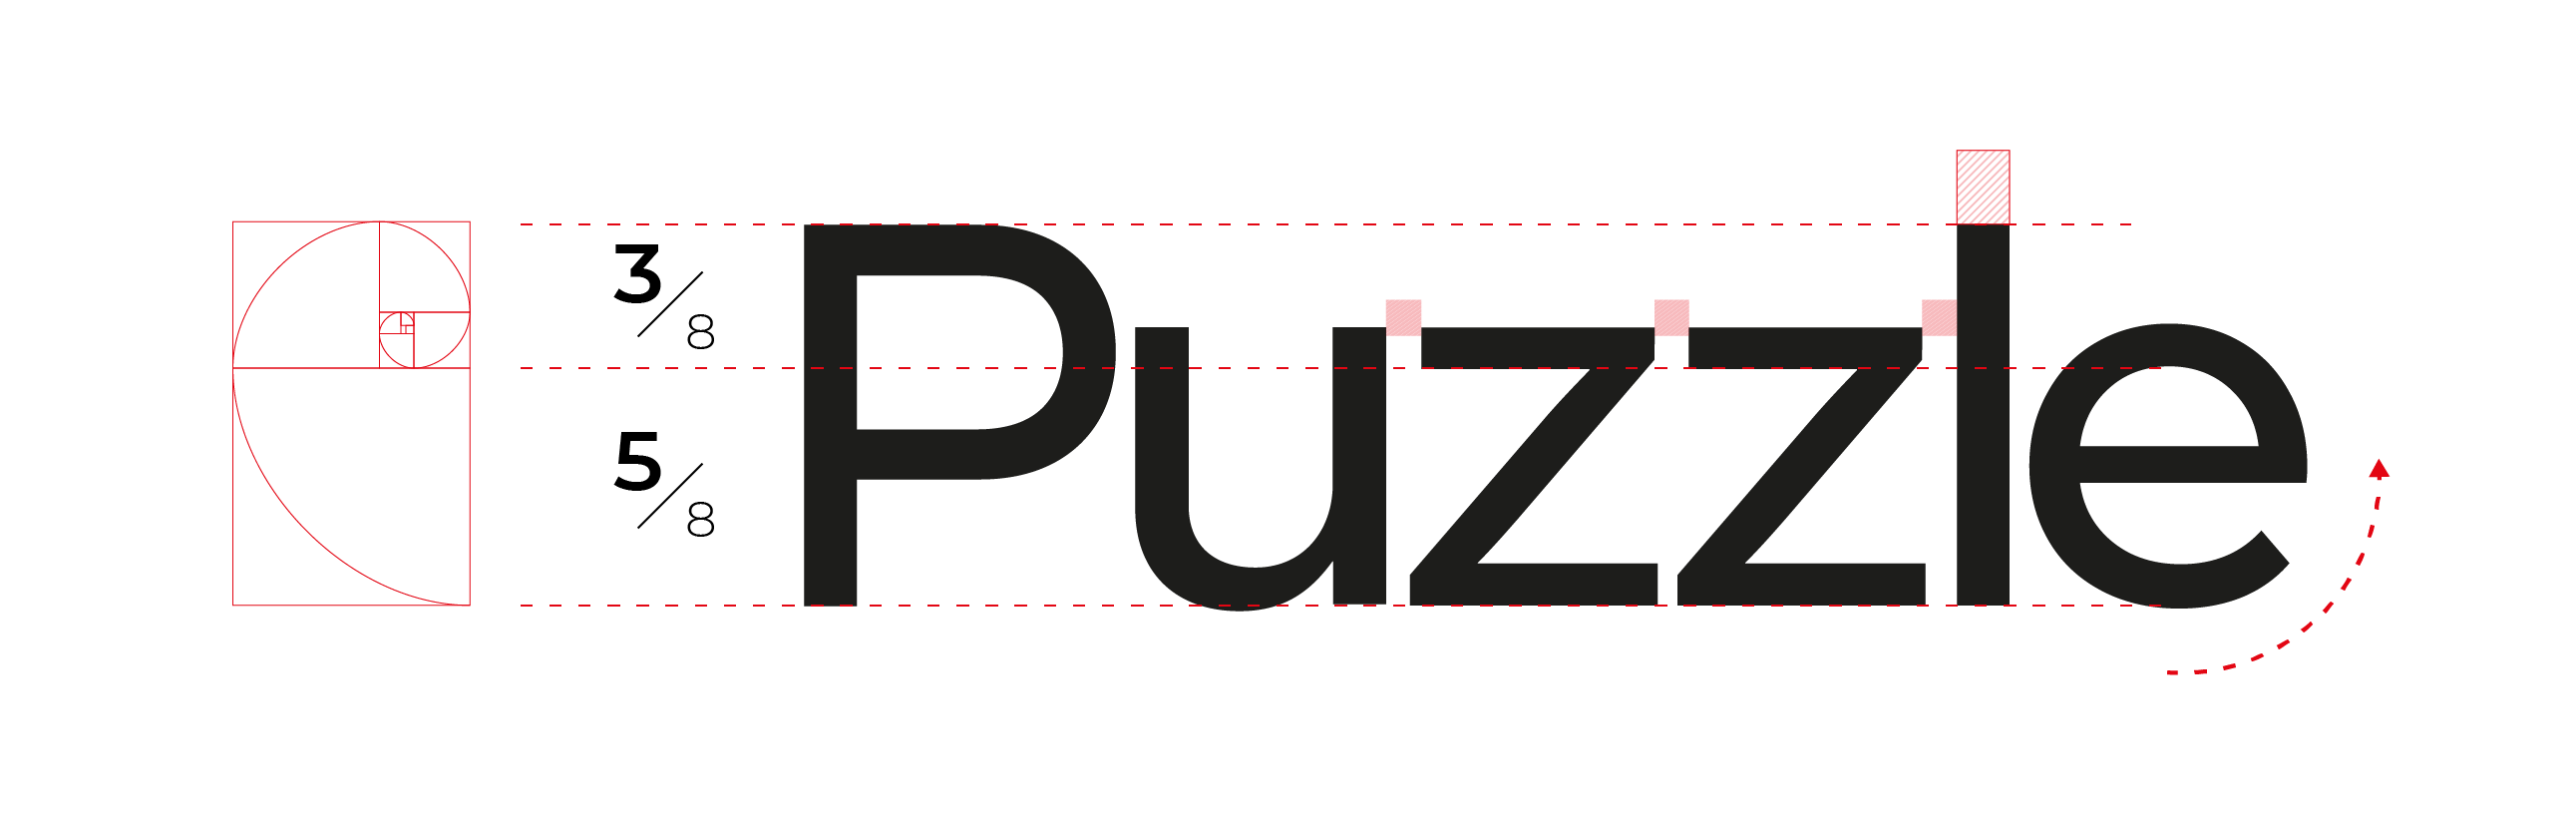 Puzzle font construction after the golden cut